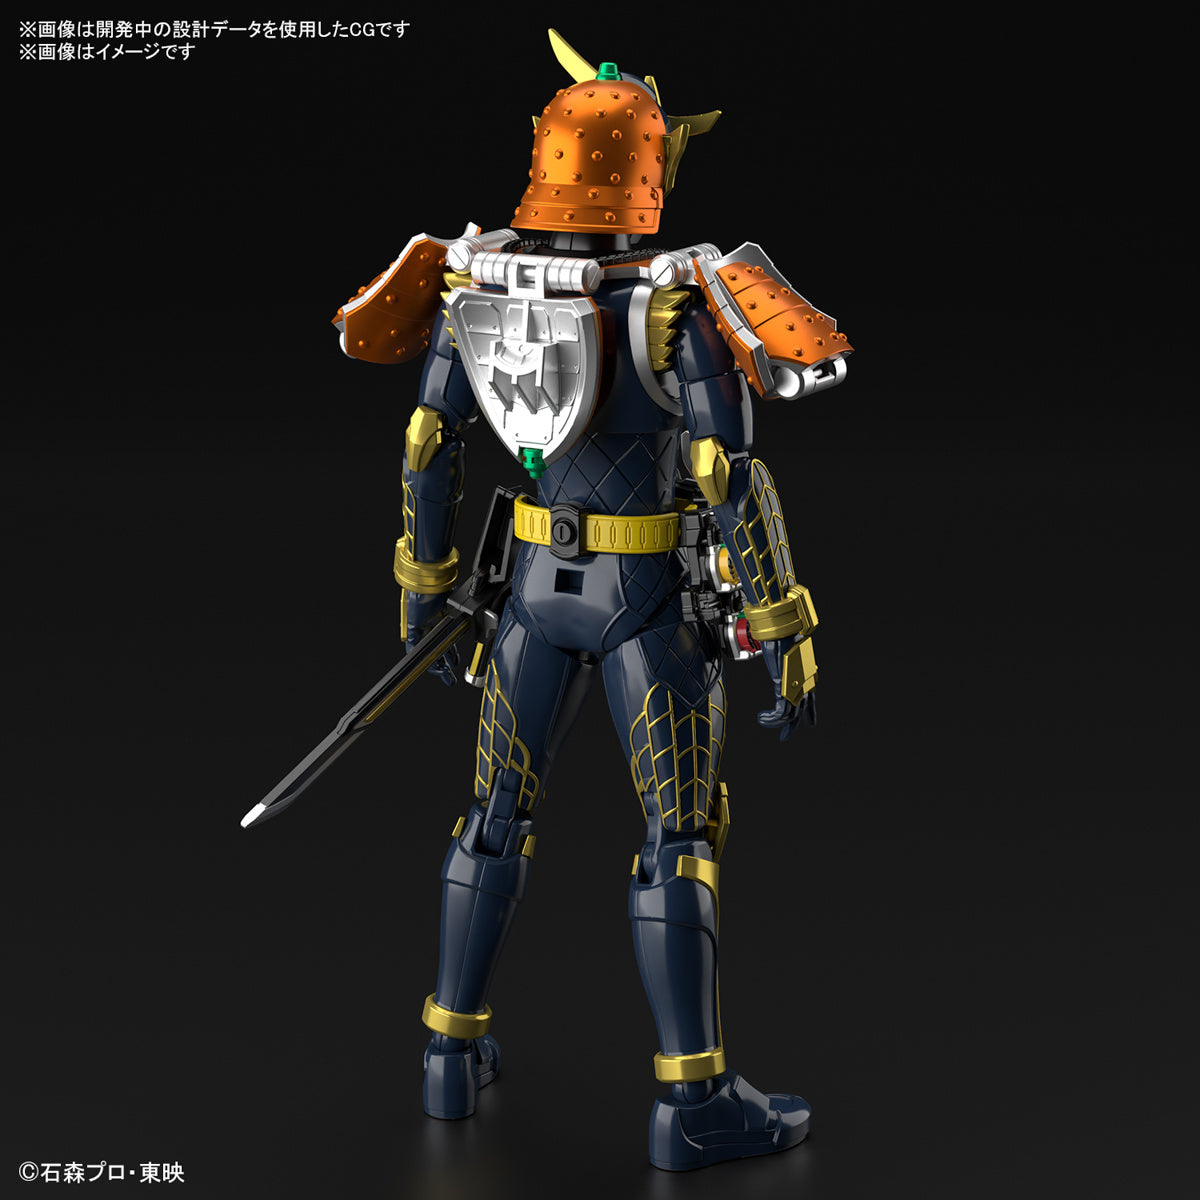 Kamen Raider Figure Rise Standard Gaim Orange Arms-Bandai-Ace Cards &amp; Collectibles